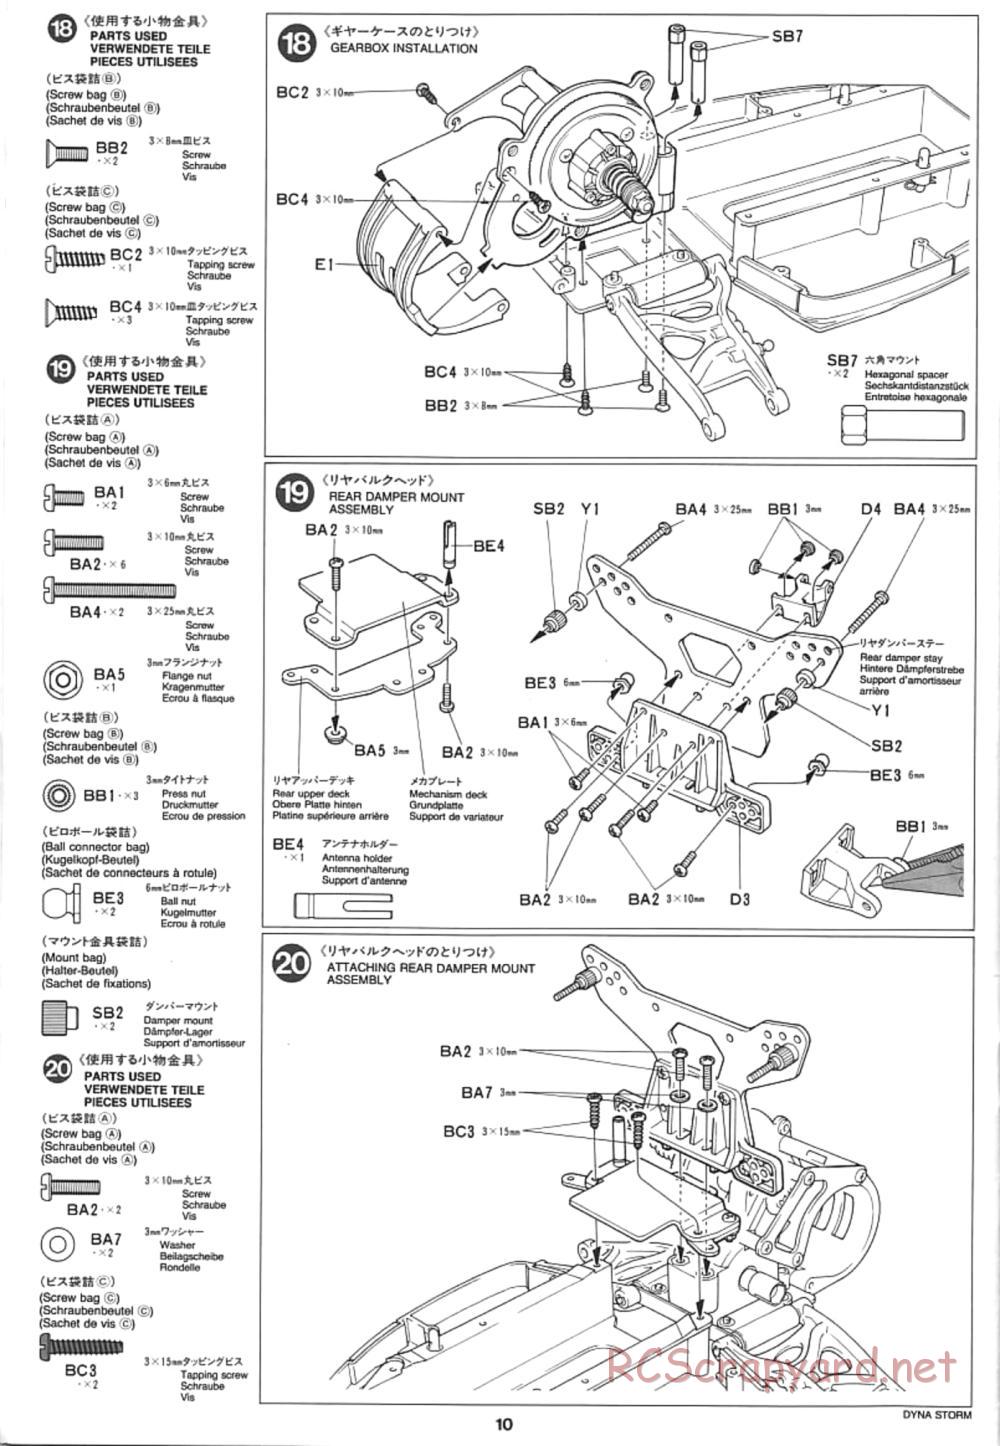 Tamiya - Dyna Storm Chassis - Manual - Page 10